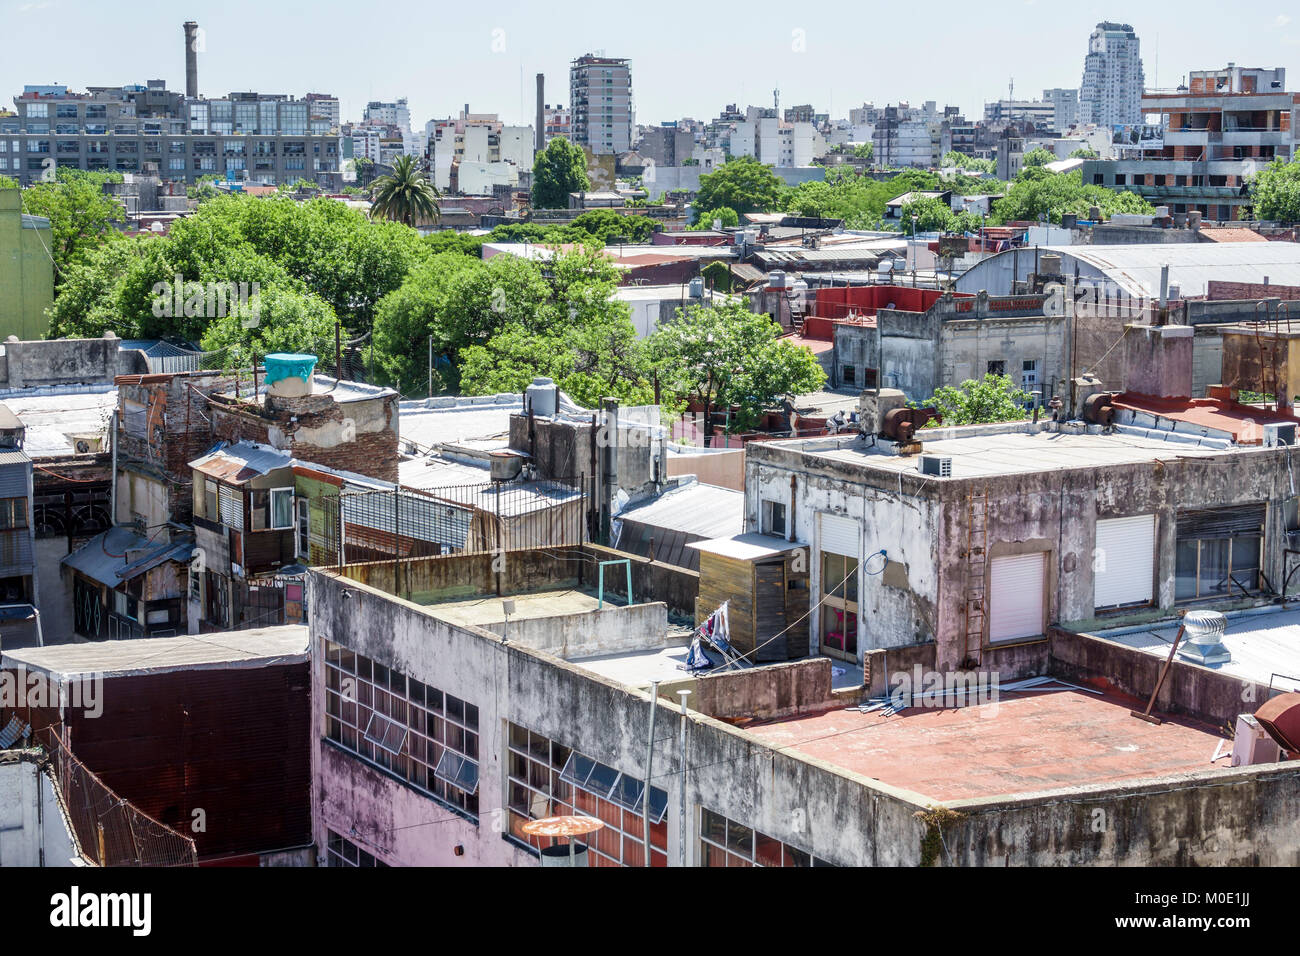 Buenos Aires Argentina,Caminito Barrio de la Boca,city skyline,industrial neighborhood,warehouse,Hispanic ARG171122207 Stock Photo